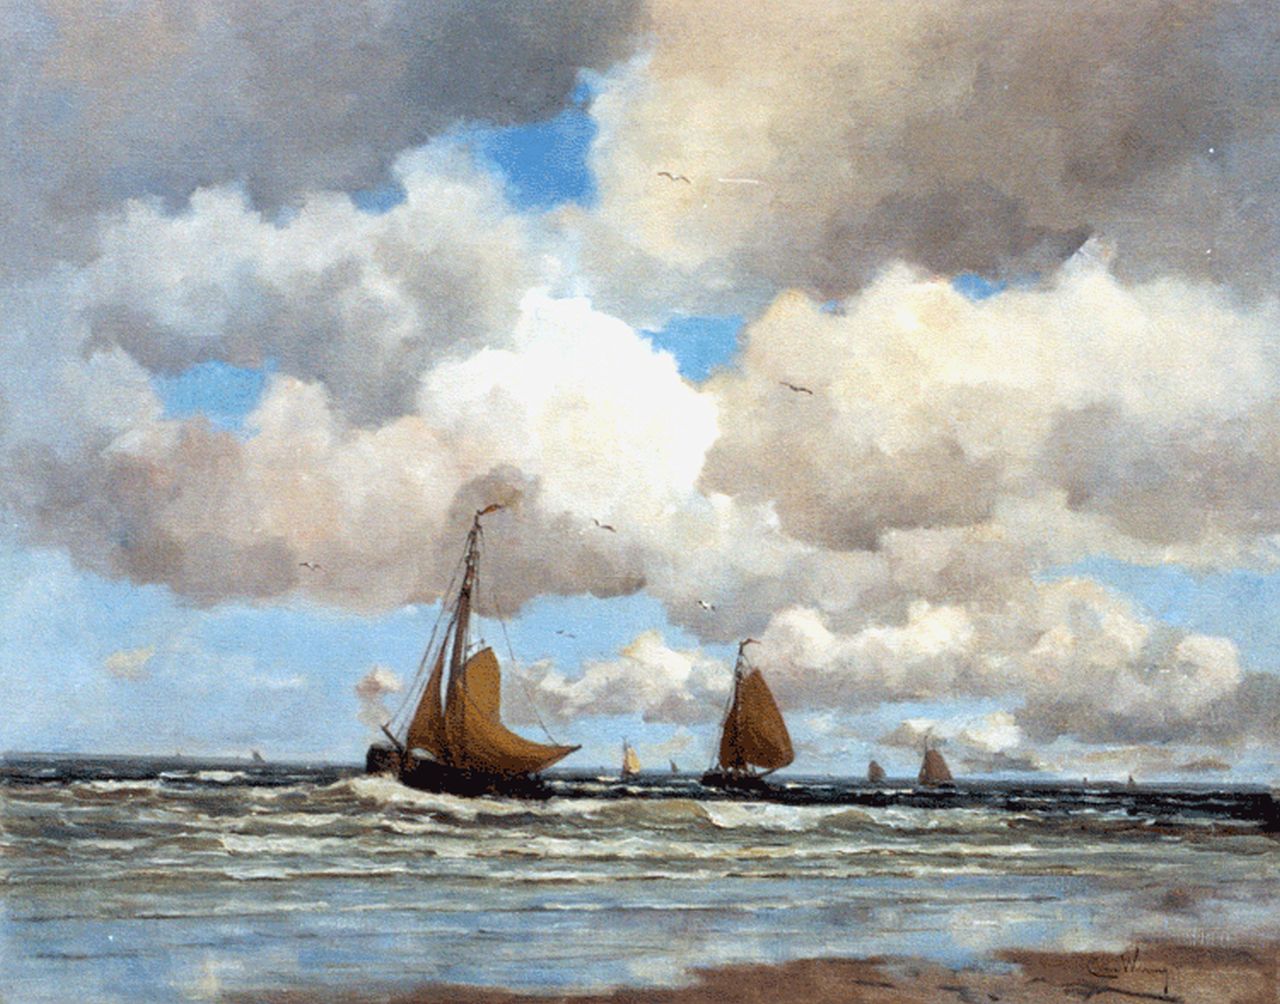 Waning C.A. van | Cornelis Anthonij 'Kees' van Waning, The arrival of the fleet, Öl auf Leinwand 78,0 x 98,0 cm, signed l.r.